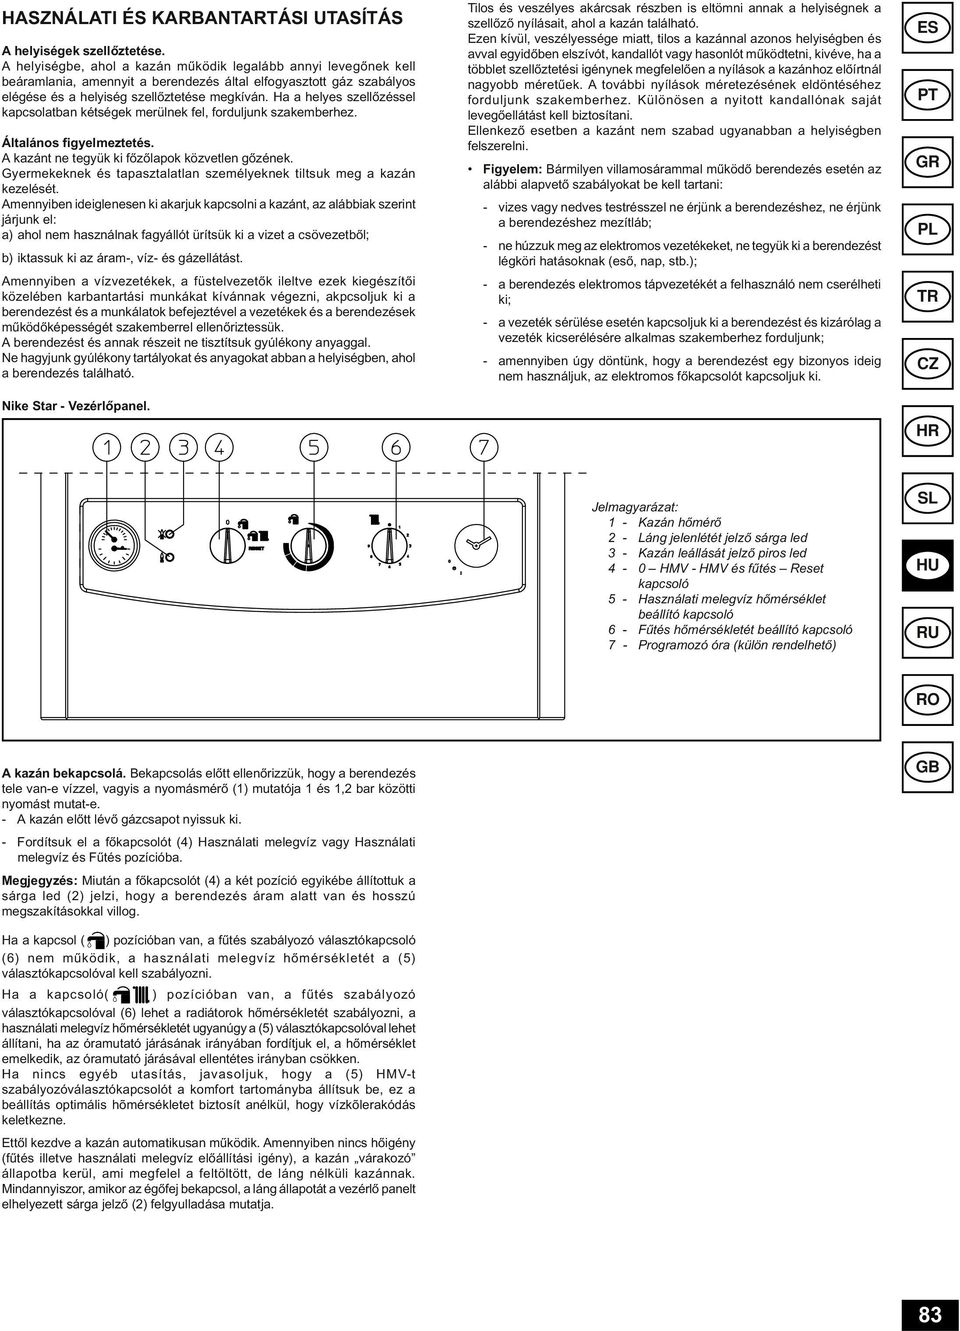 Manual de instrucciones y advertencias. Manual de instruções e advertências  ÁˉÂÈÚ ÈÔ Ô ËÁÈÒÓ - PDF Ingyenes letöltés